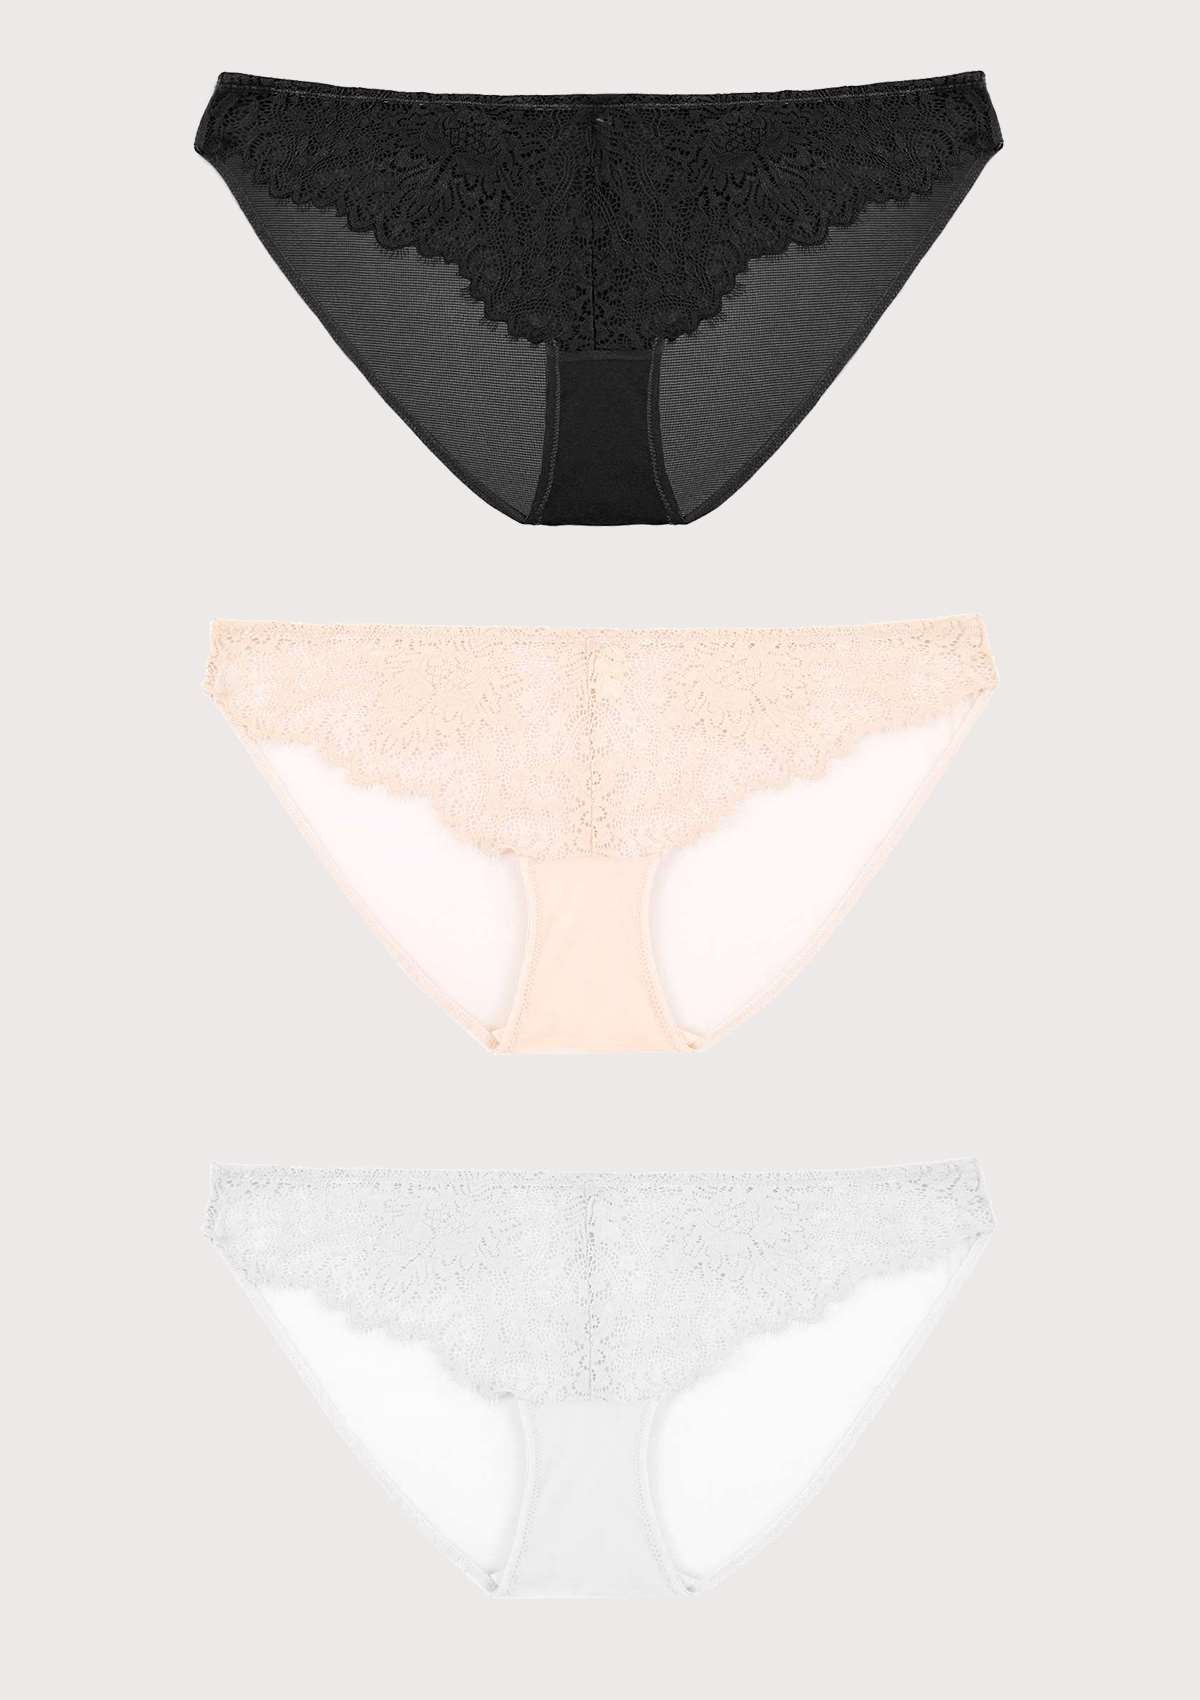 HSIA Sunflower Exquisite Lighweight Soft Lace Bikini Panties 3 Pack - S / Black+White+Pink